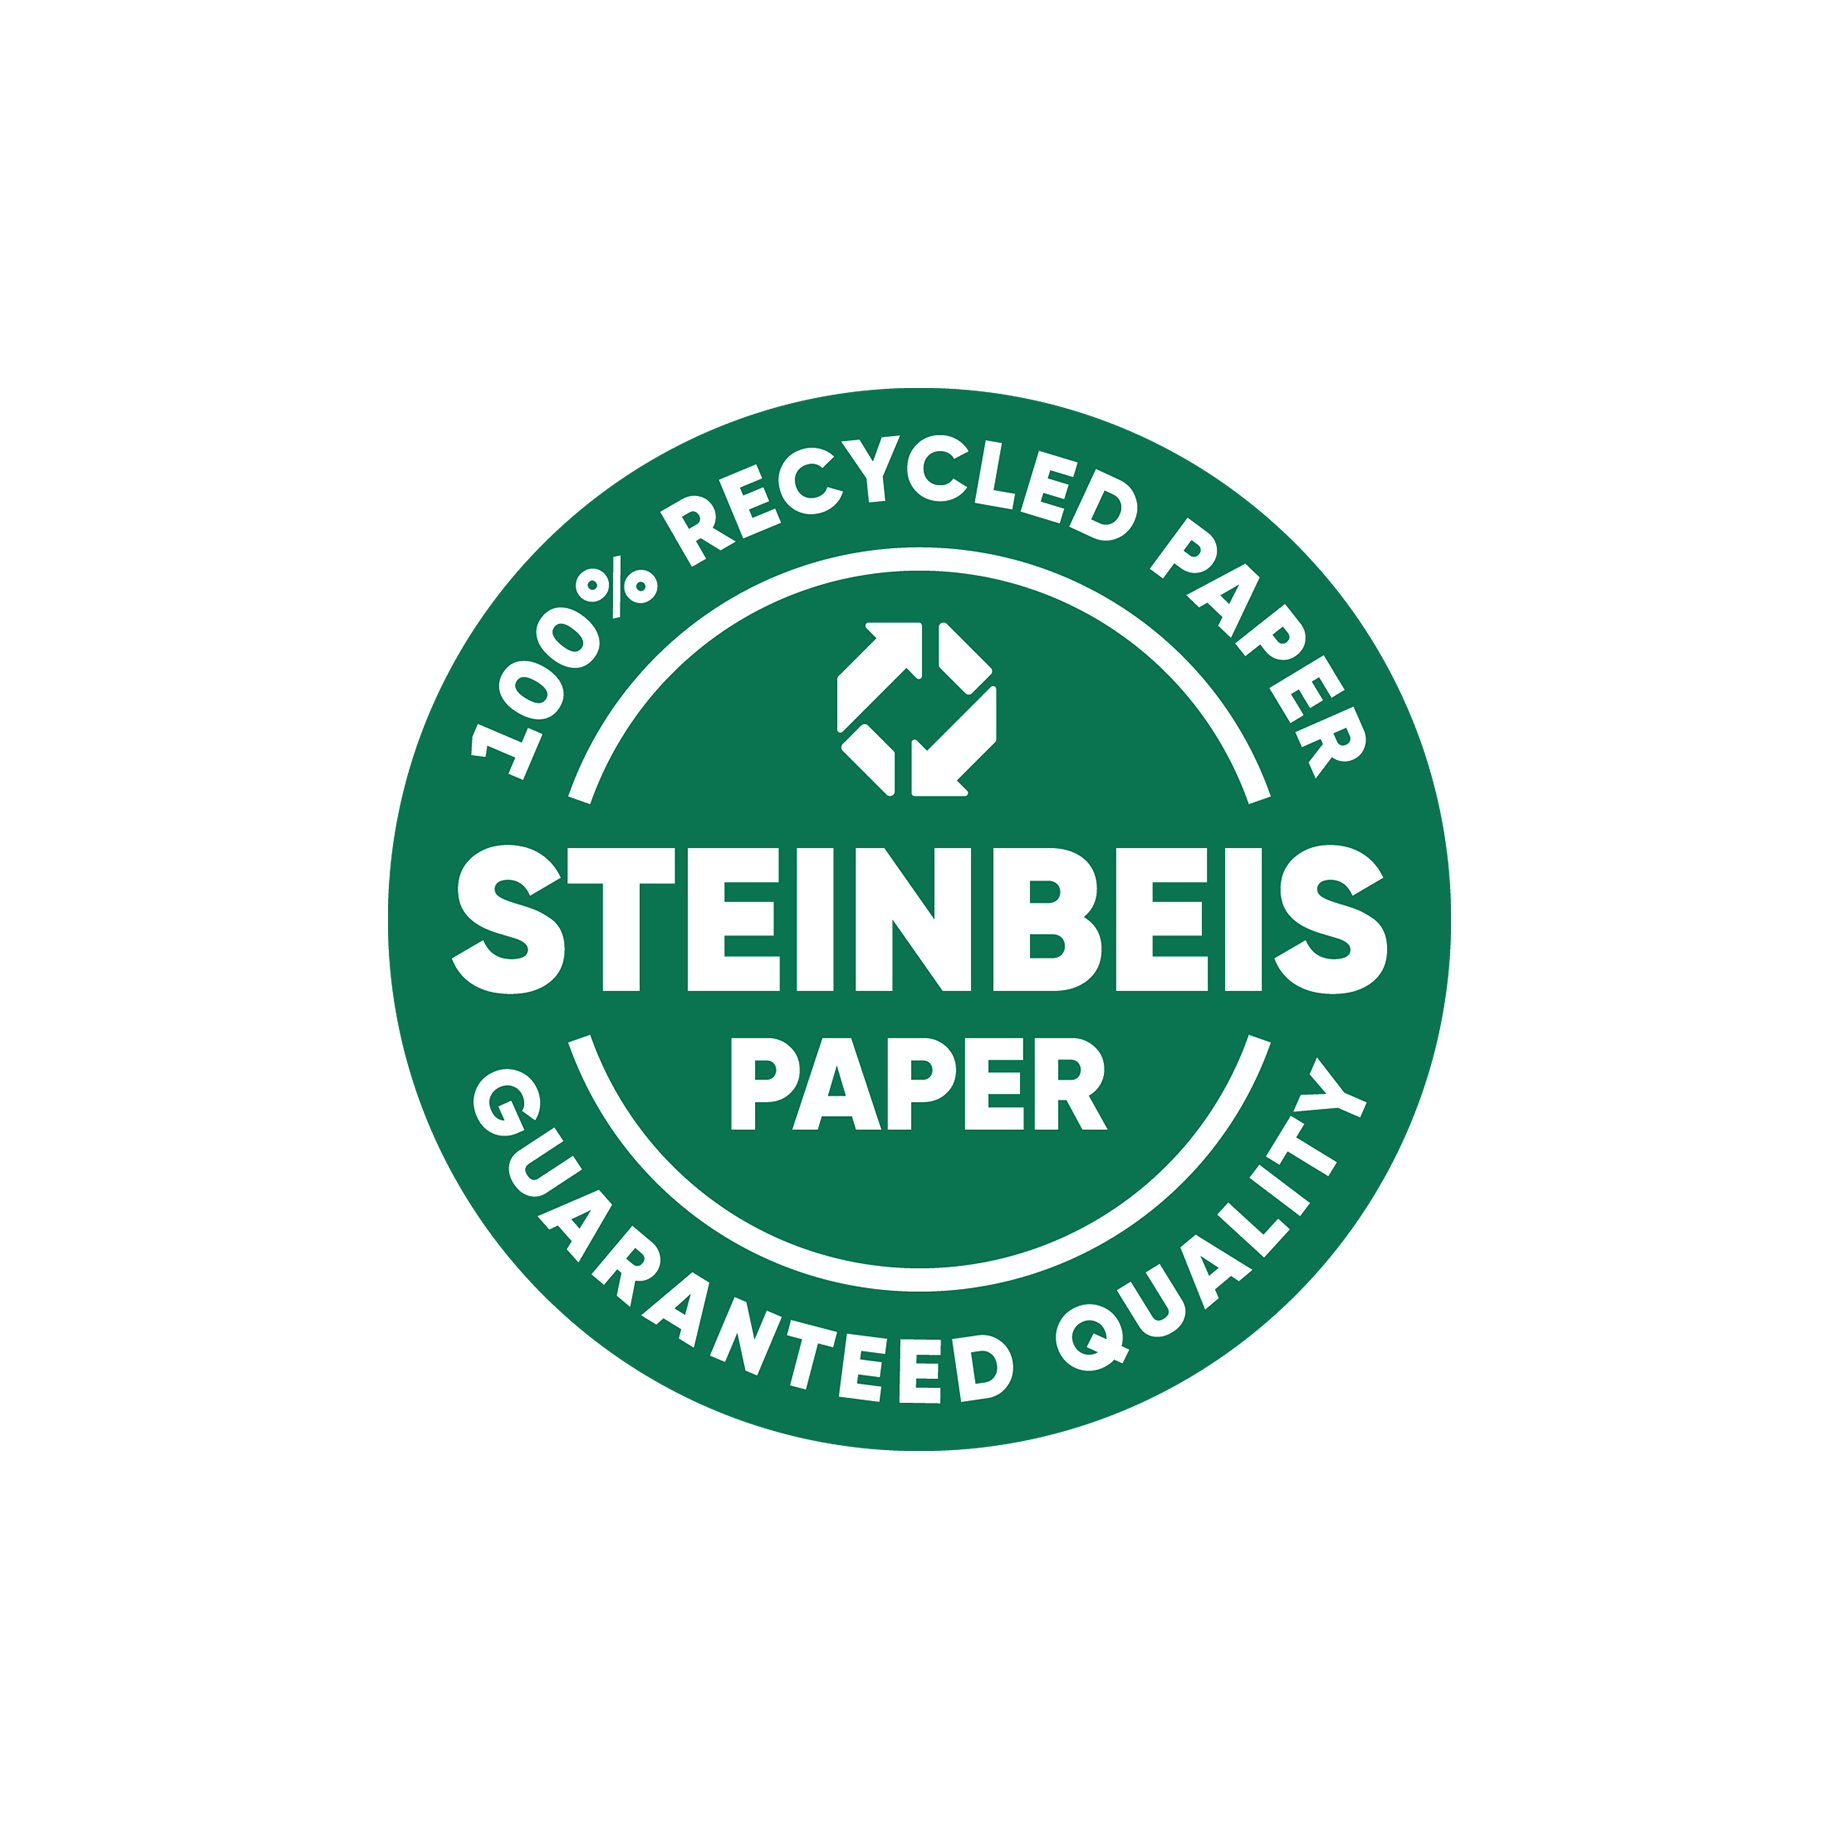 Recycling-Kopierpapier Steinbeis No.3